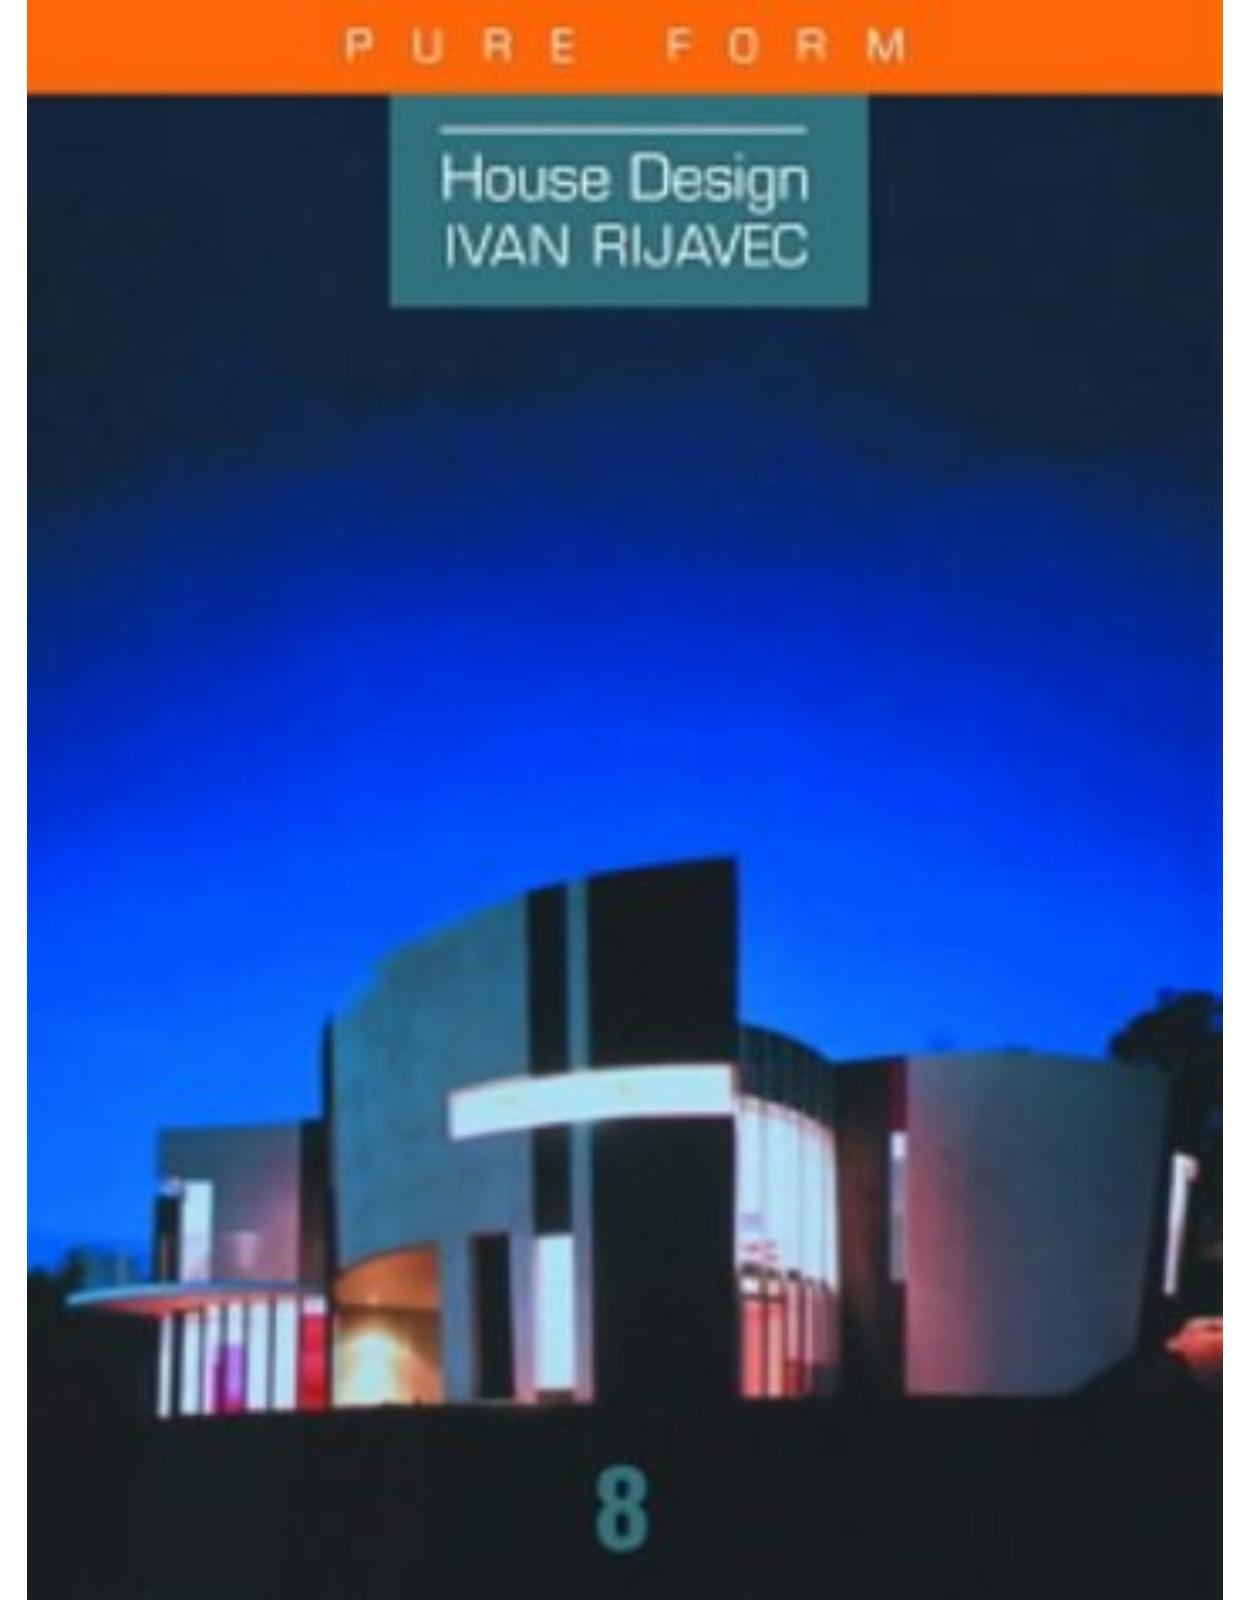 Ivan Rijavec: Pure Form (House Design)